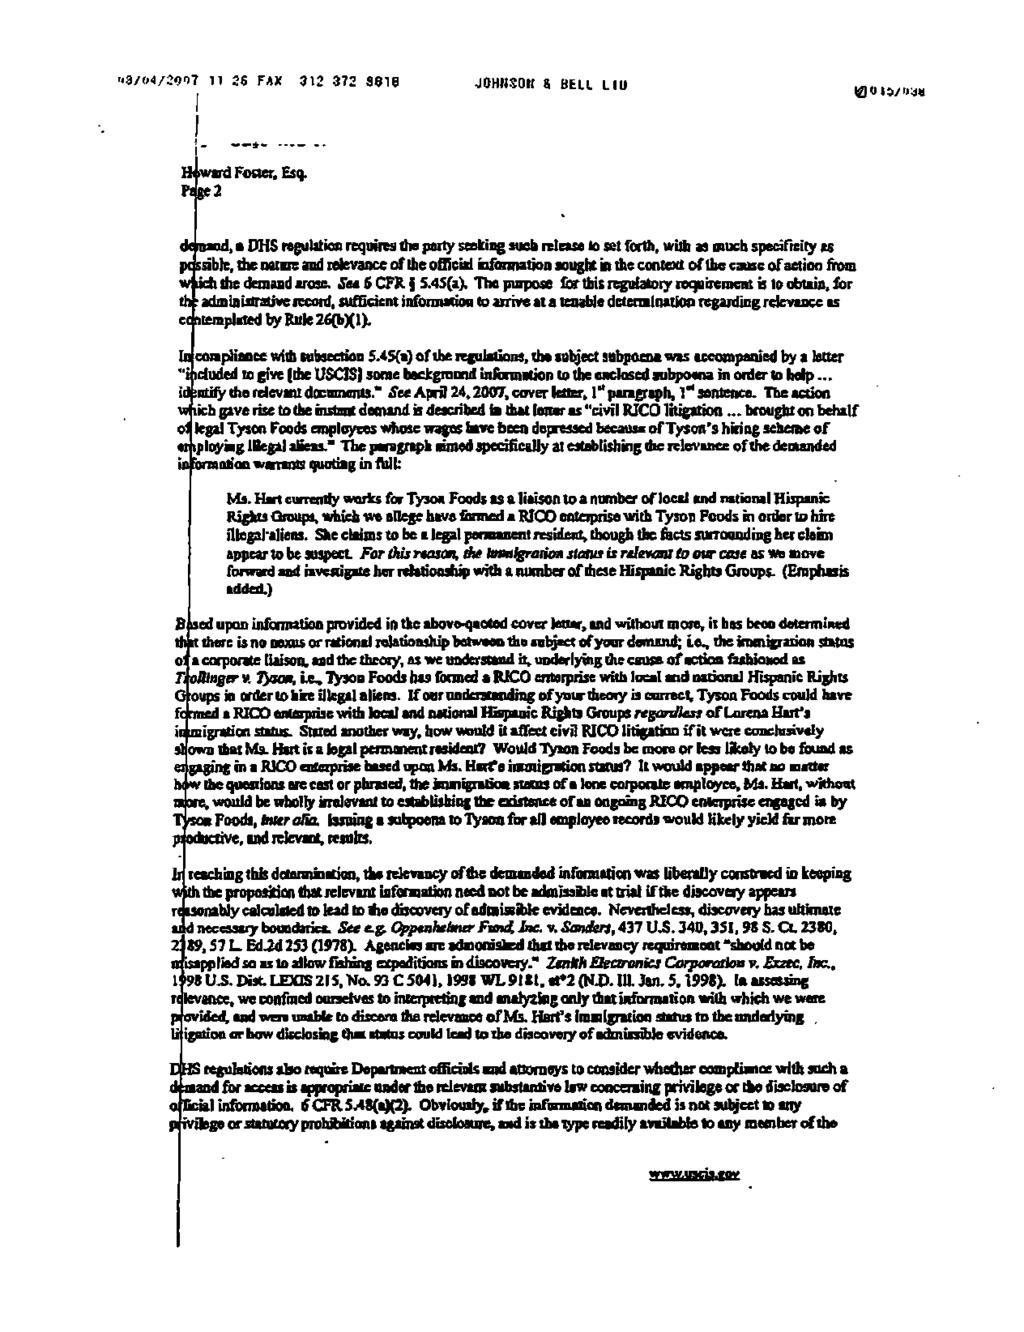 Case 1:07-mc-00341-RJL Document